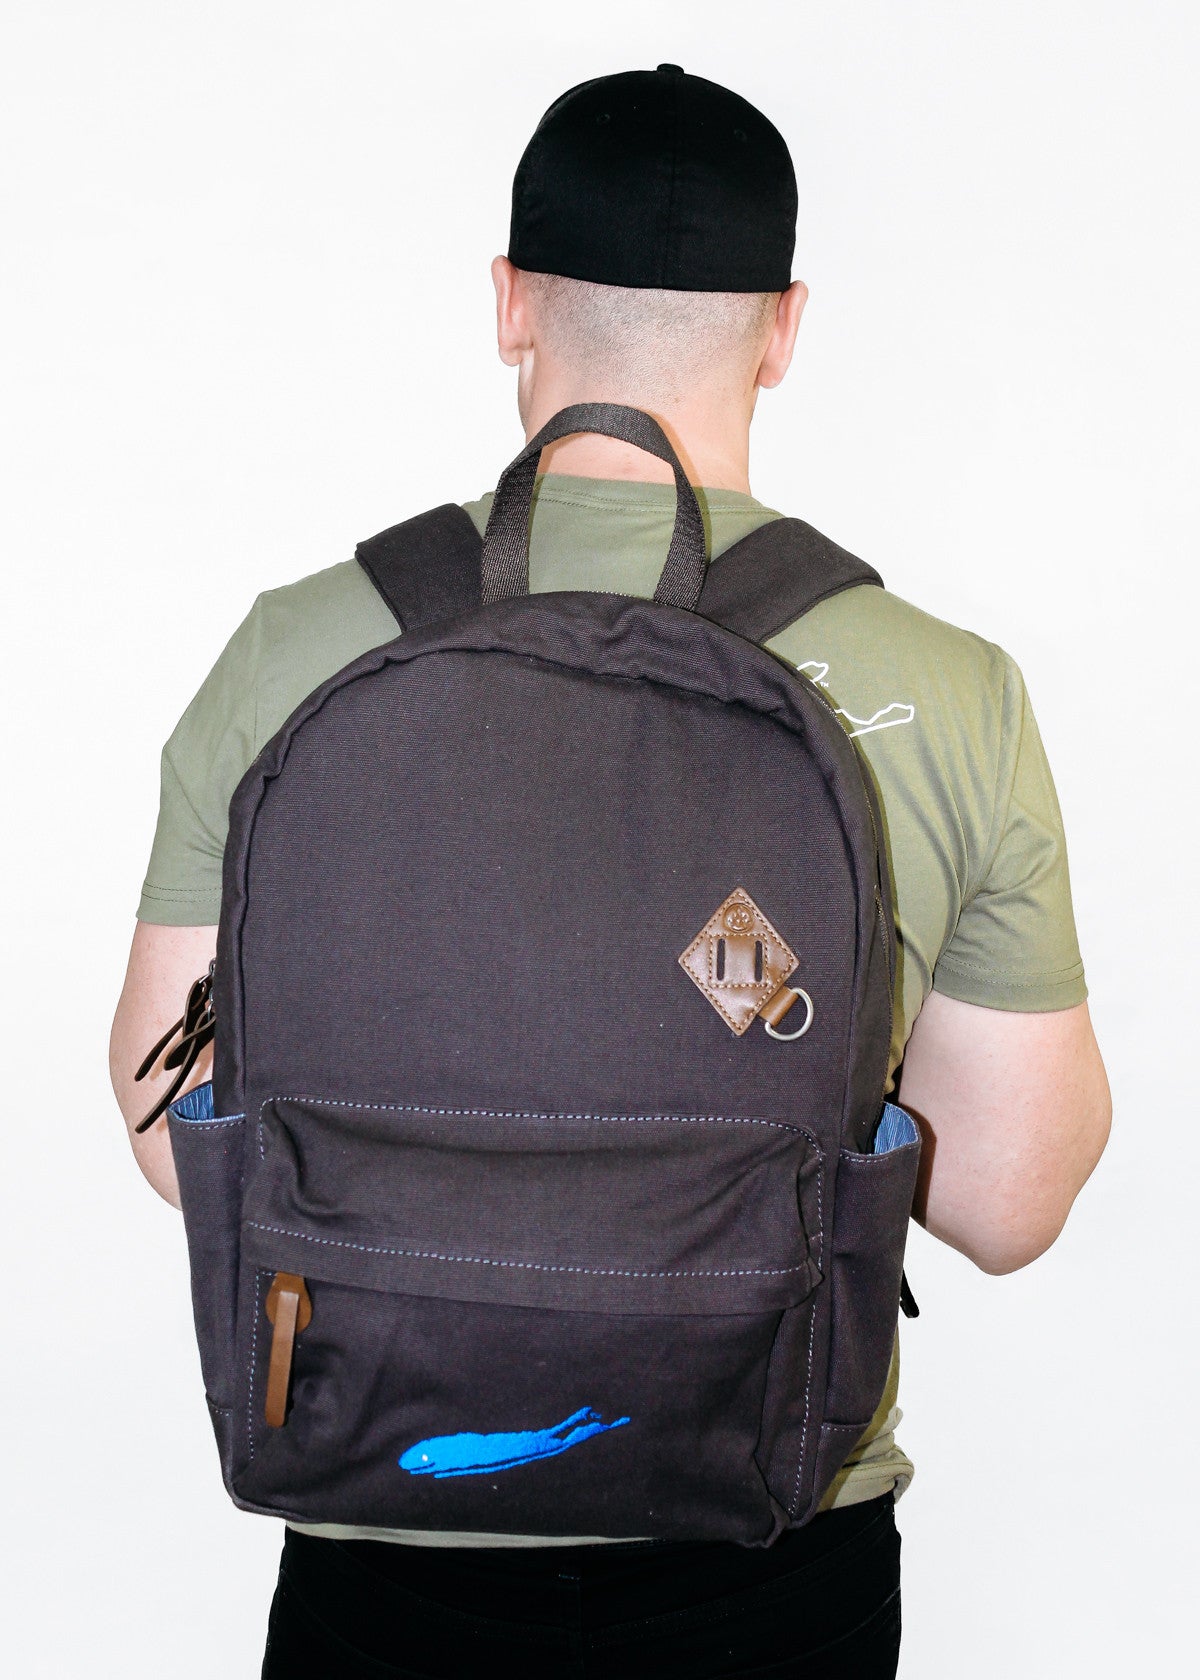 Backpack: "Alternative Brand" Tech Essentials - Love The Island